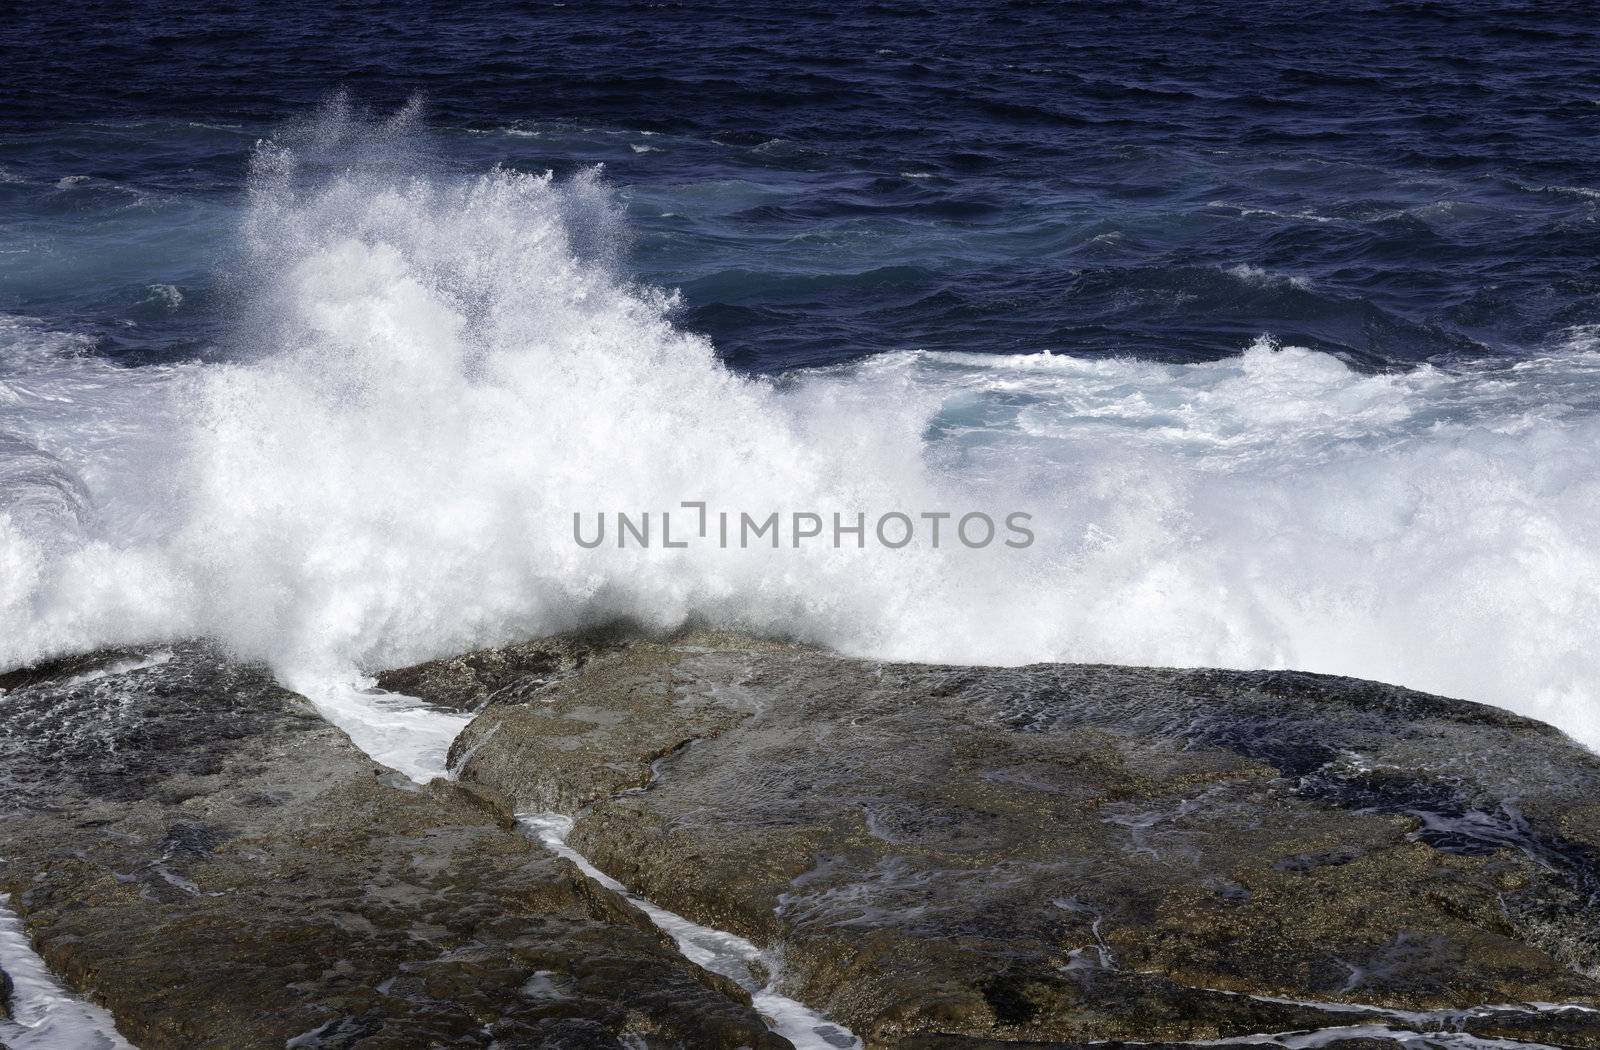 ocean waves crashing against the rocks near bondi